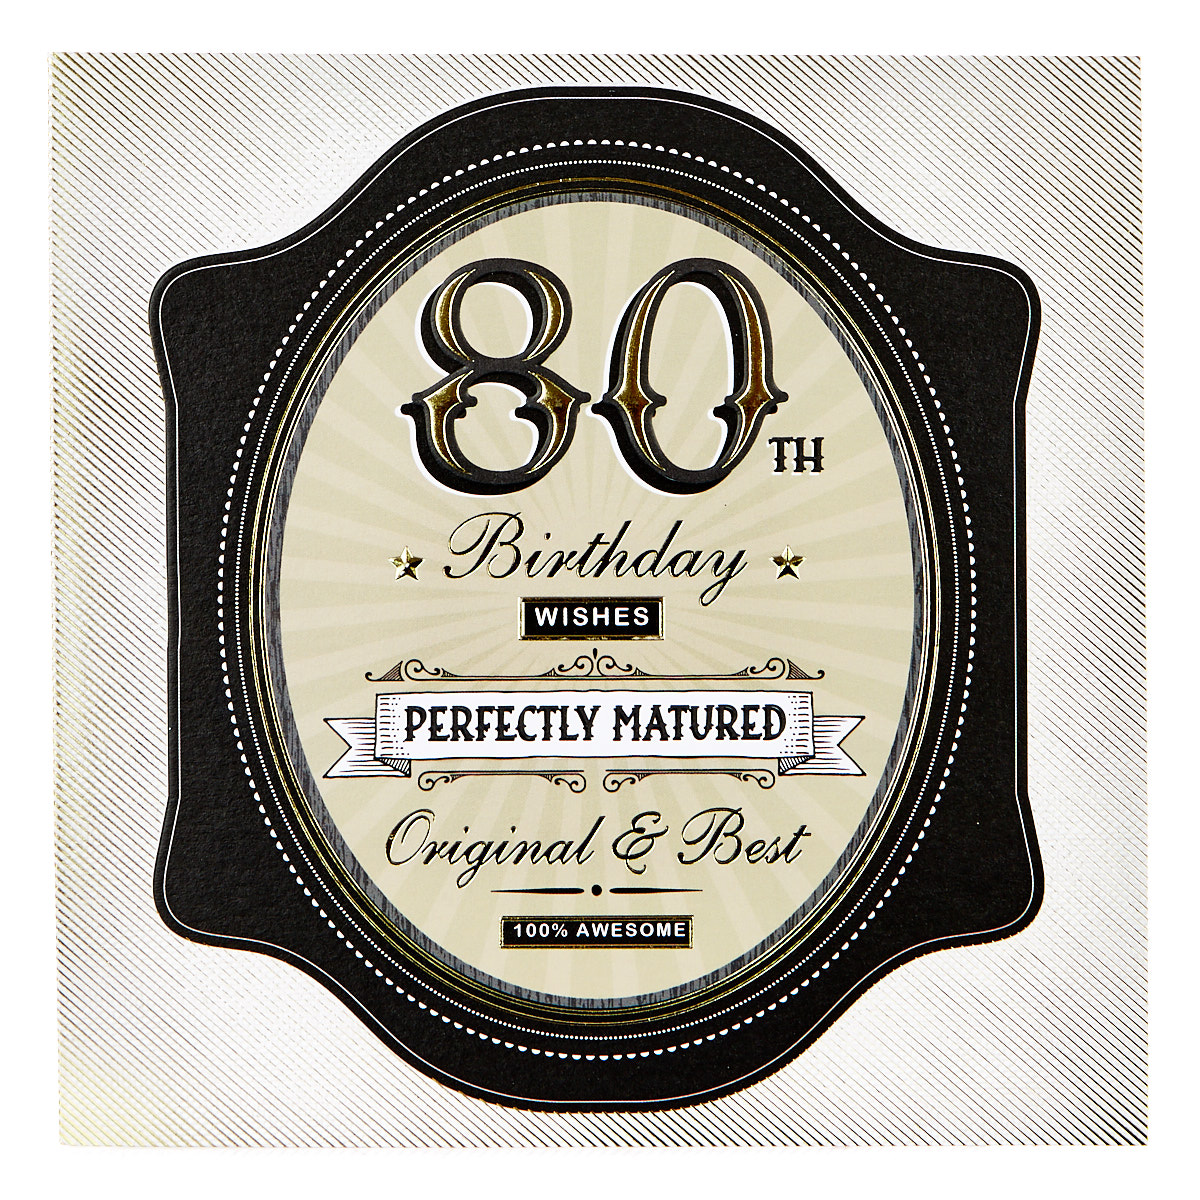 Platinum Collection 80th Birthday Card - Original & Best